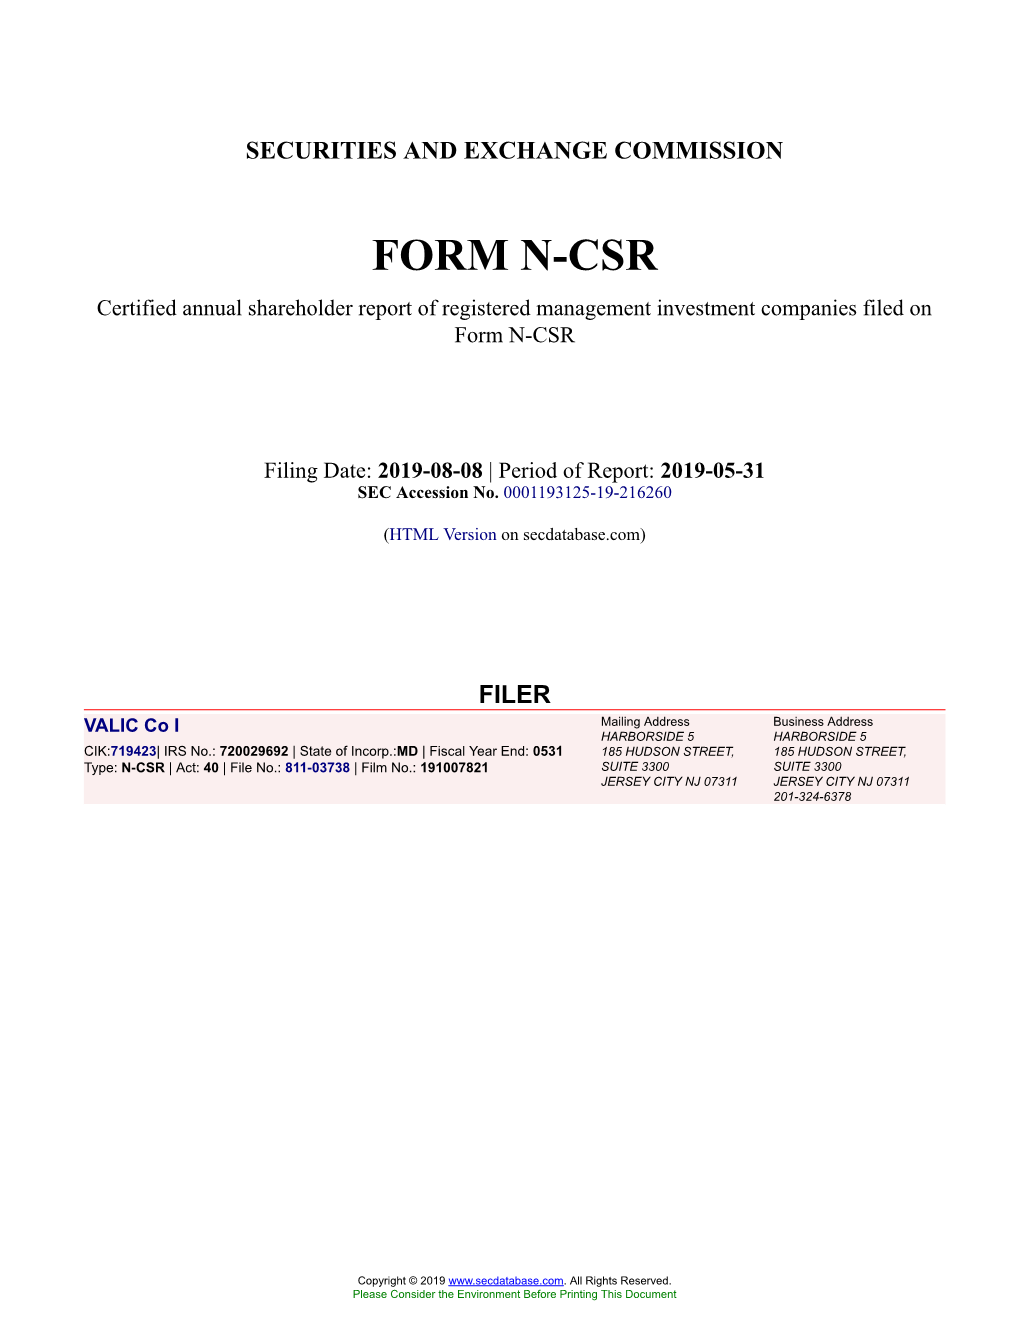 VALIC Co I Form N-CSR Filed 2019-08-08